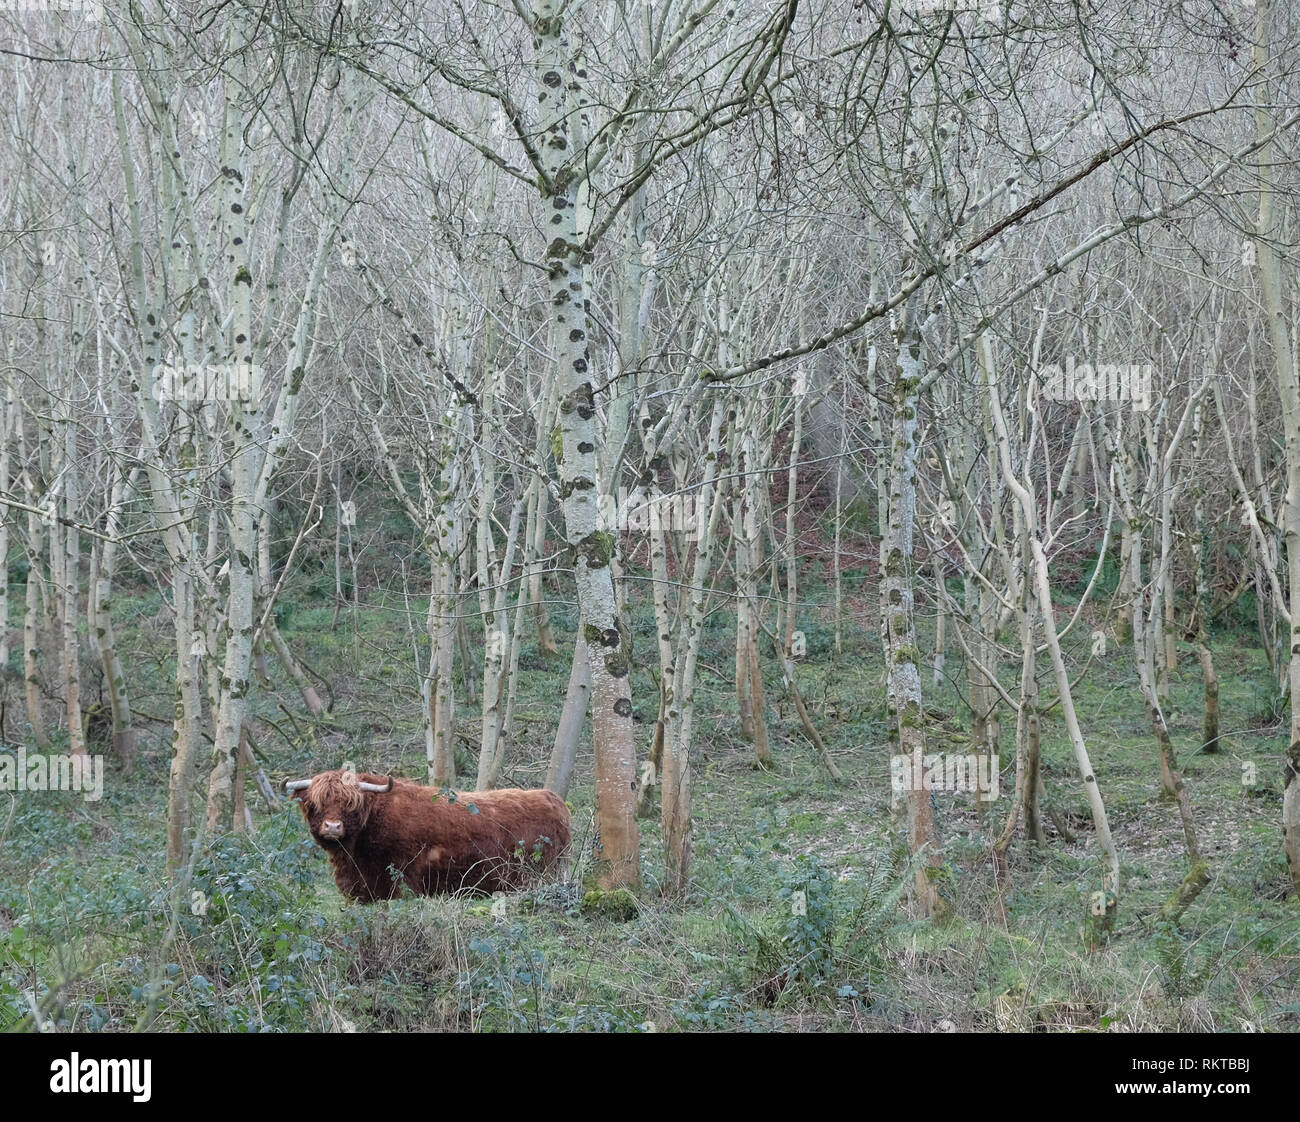 Highland Aberdeen Angus amongst birch trees, Glynn, County Antrim. Stock Photo